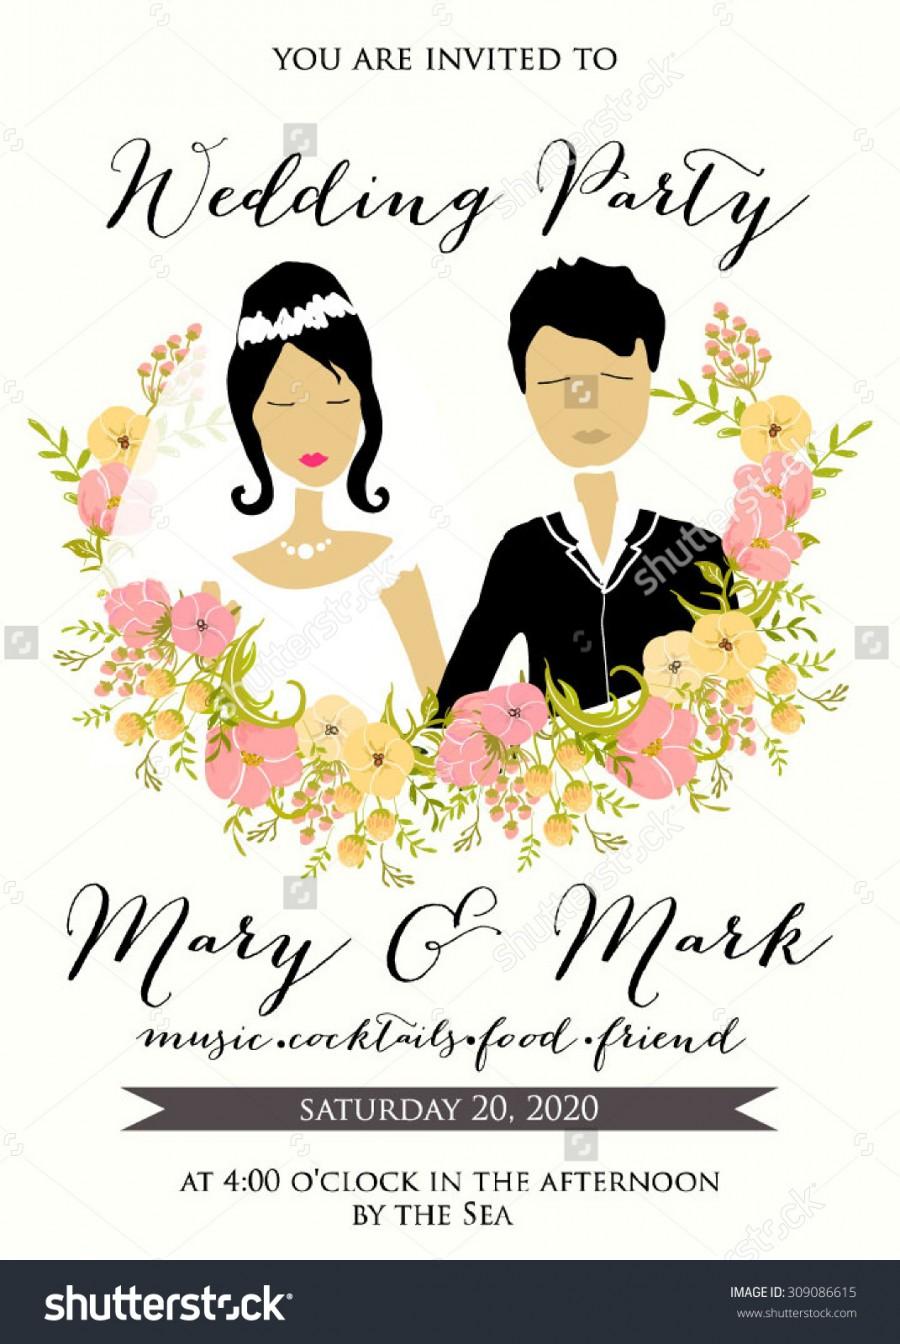 Hochzeit - Wedding card or invitation with floral background